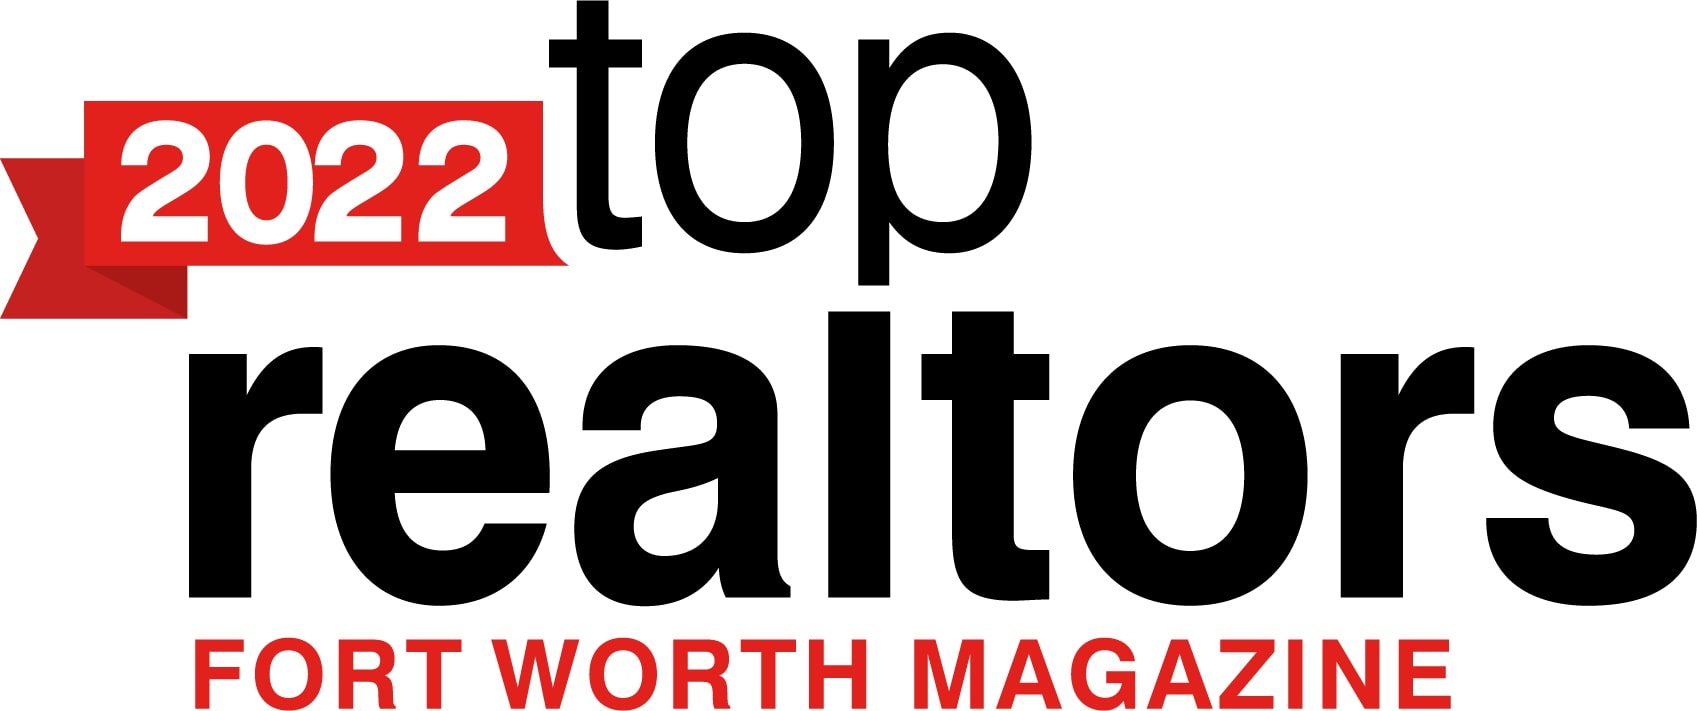 Top Realtor Ft. Worth, Southlake, Keller Award Ft. Worth Magazine 2022